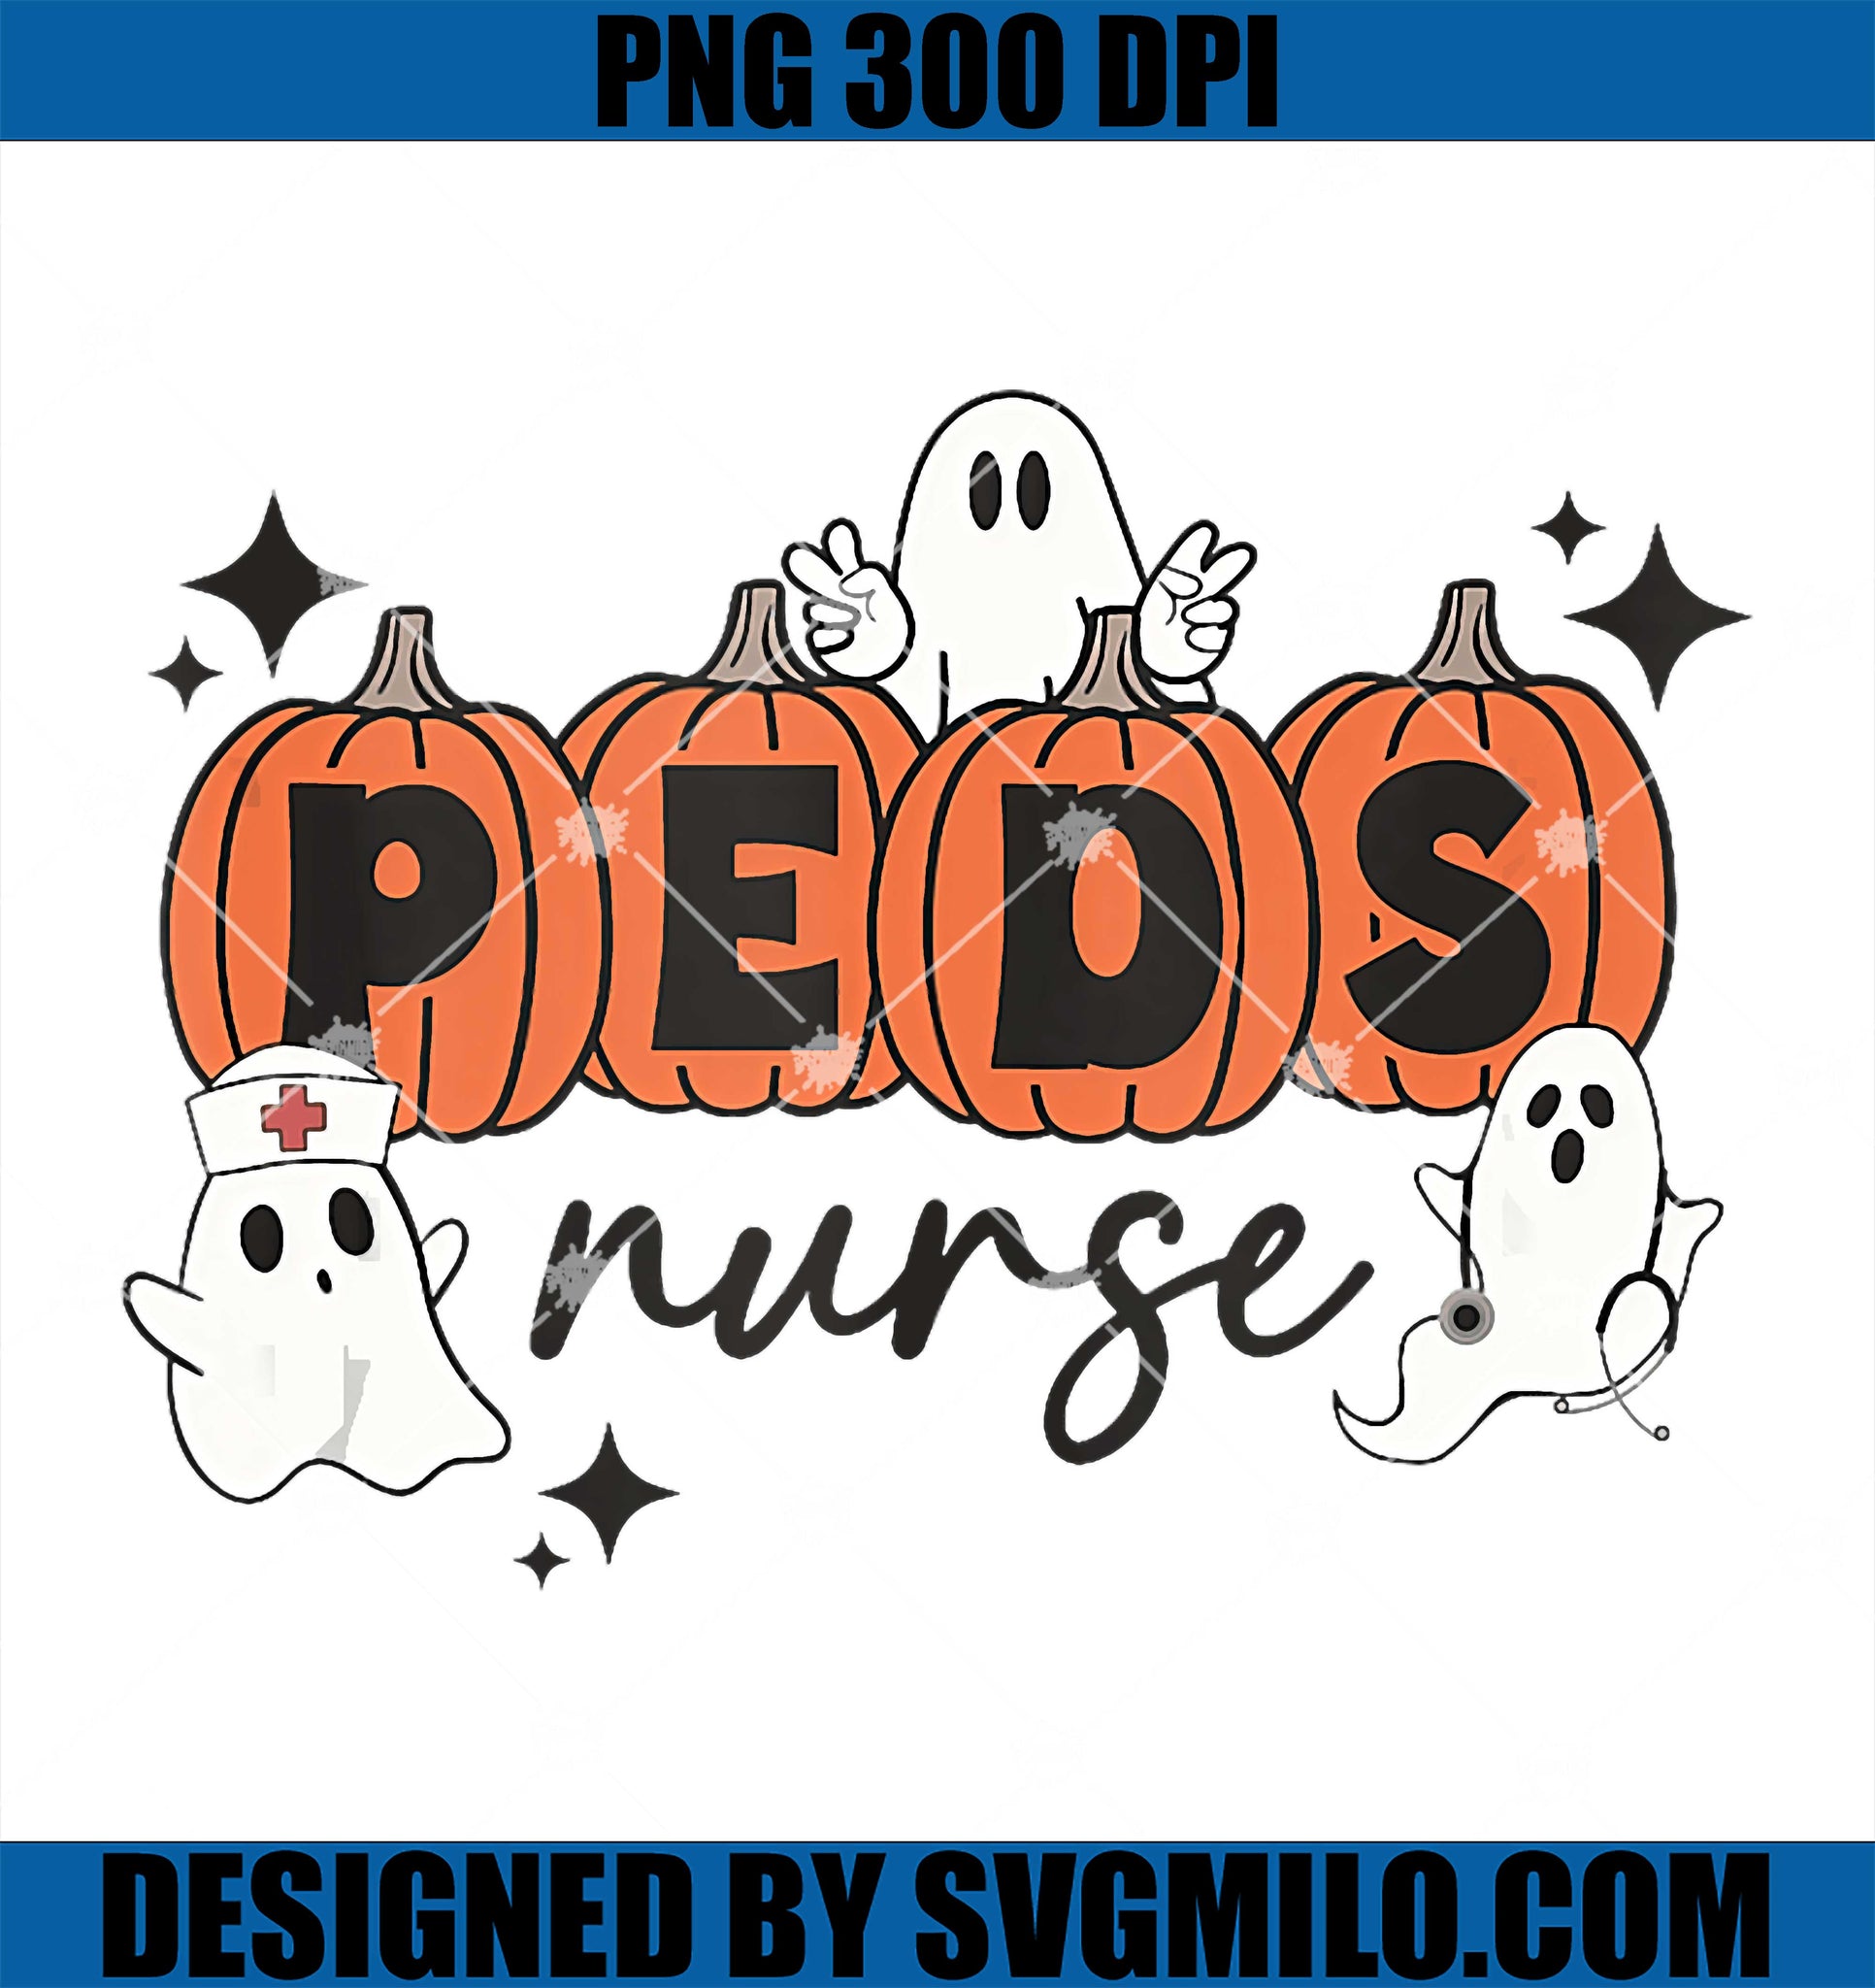 Peds Pediatric Nurse Halloween PNG, Nurse Boo Crew Ghost Pumpkins PNG